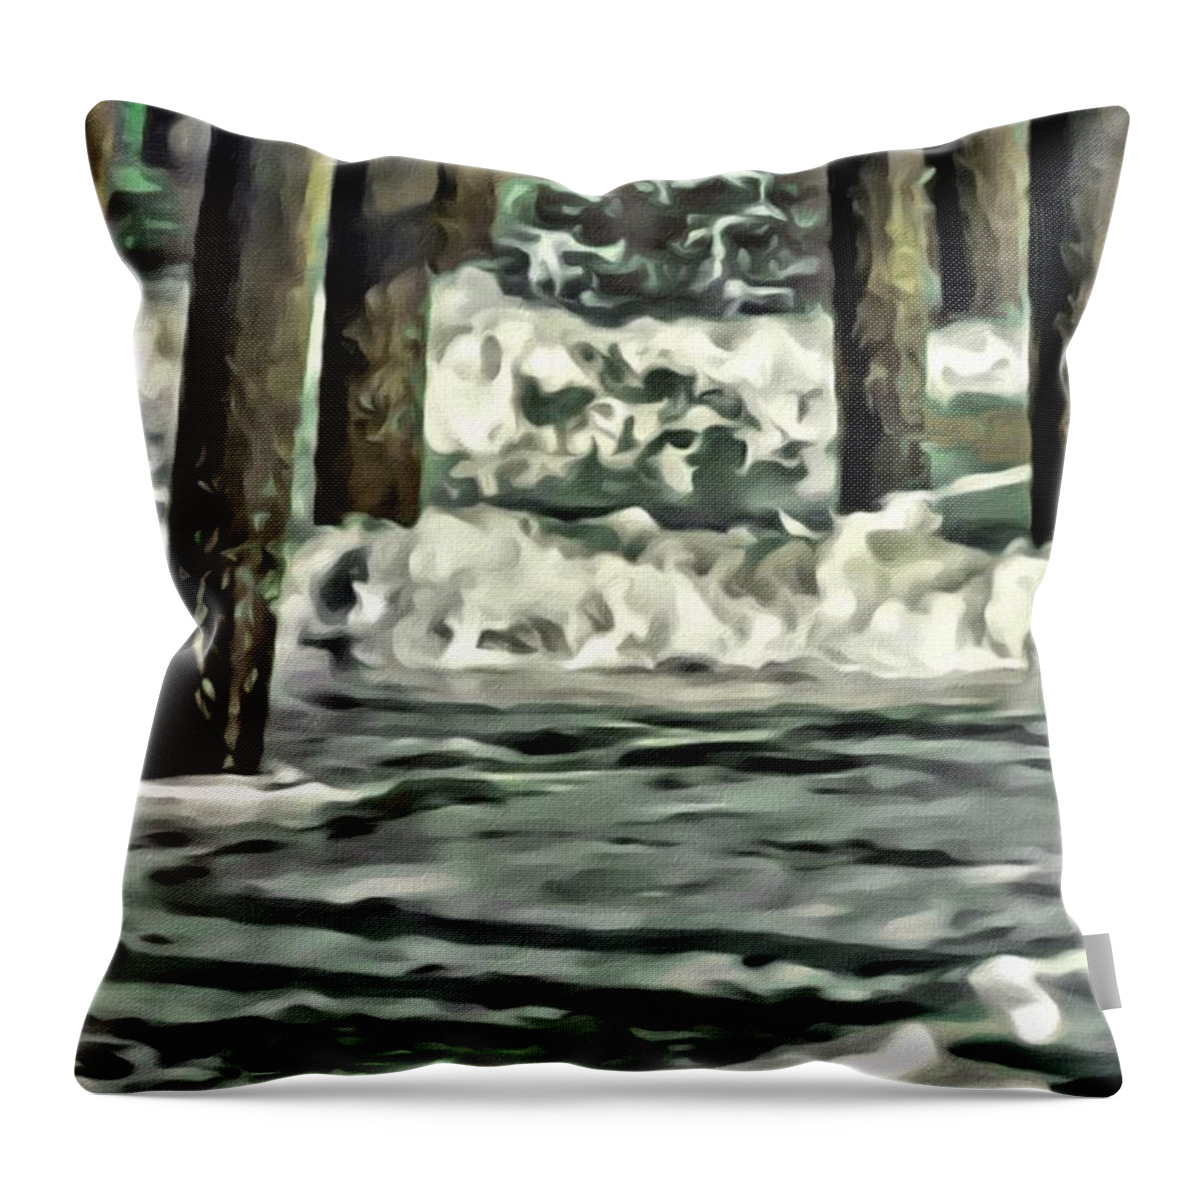 Ocean Dreams Throw Pillow featuring the painting Ocean Dreams by Marian Lonzetta